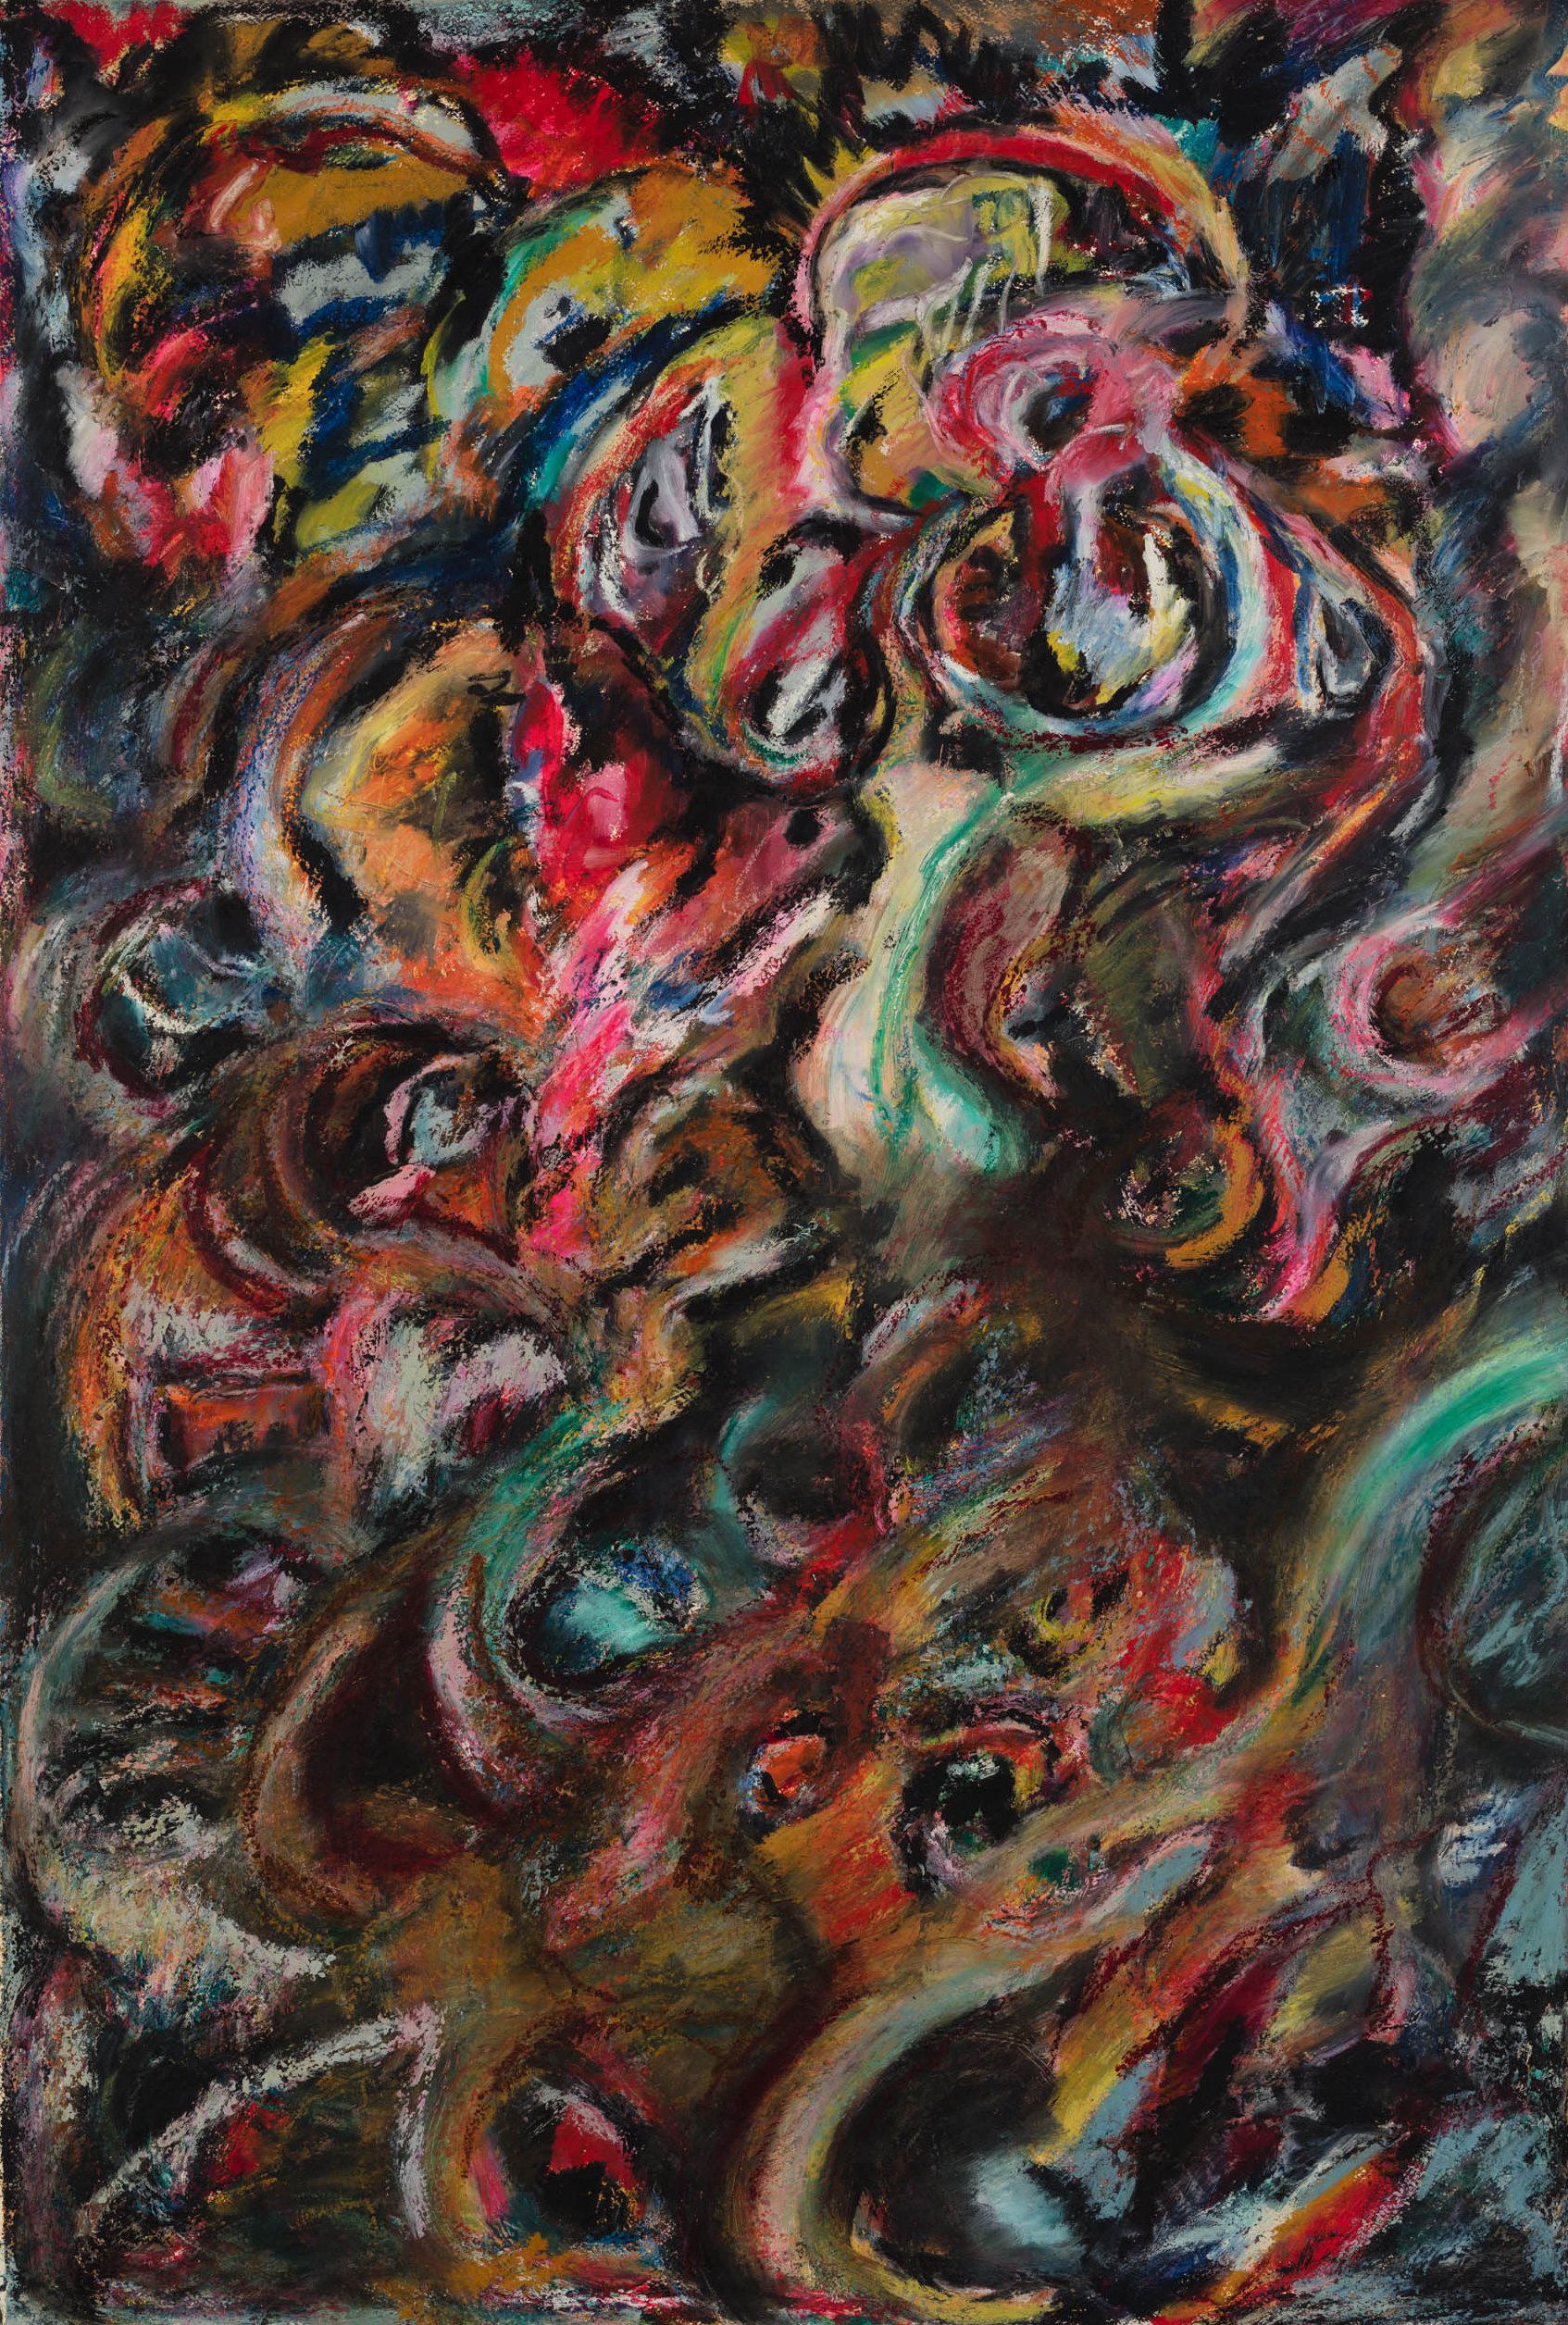 Liliane Lijn, Dark Energy, oil pastel and watercolour on Whatman paper, 107 x 74 x 4.7 cm framed (42 1/8 x 29 1/8 x 1 7/8 in framed), 1989